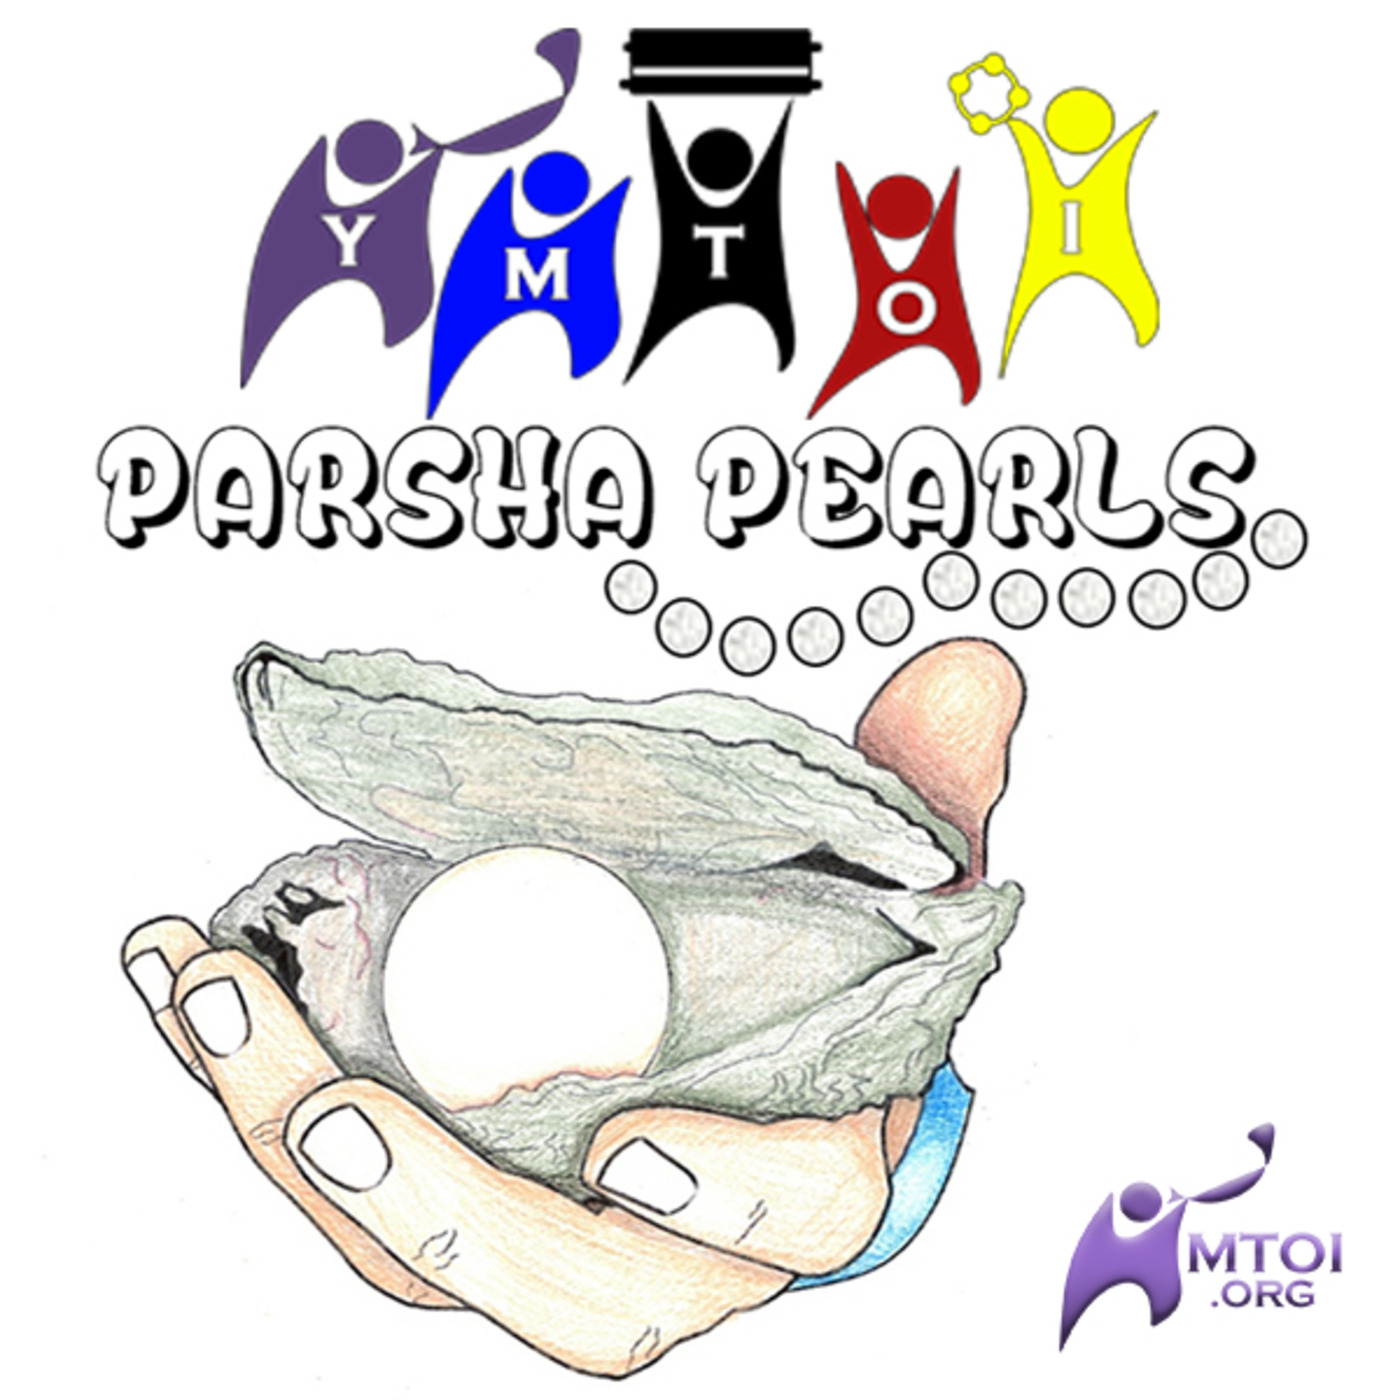 YMTOI Parsha Pearls 3.2 Lech Lecha - Lech Lecha (Go or Leave)